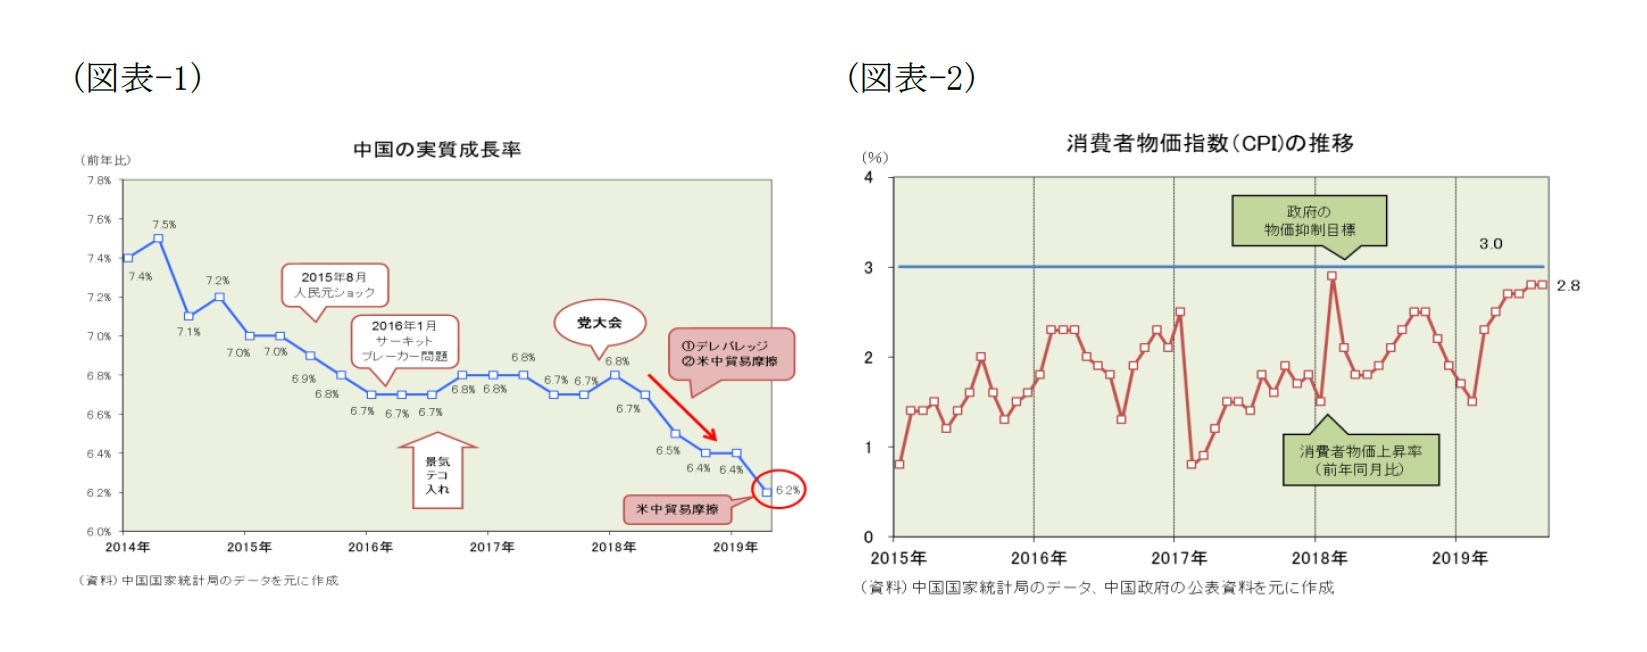 （図表-1）中国の実質成長率/（図表-2）消費者物価指数(CPI)の推移